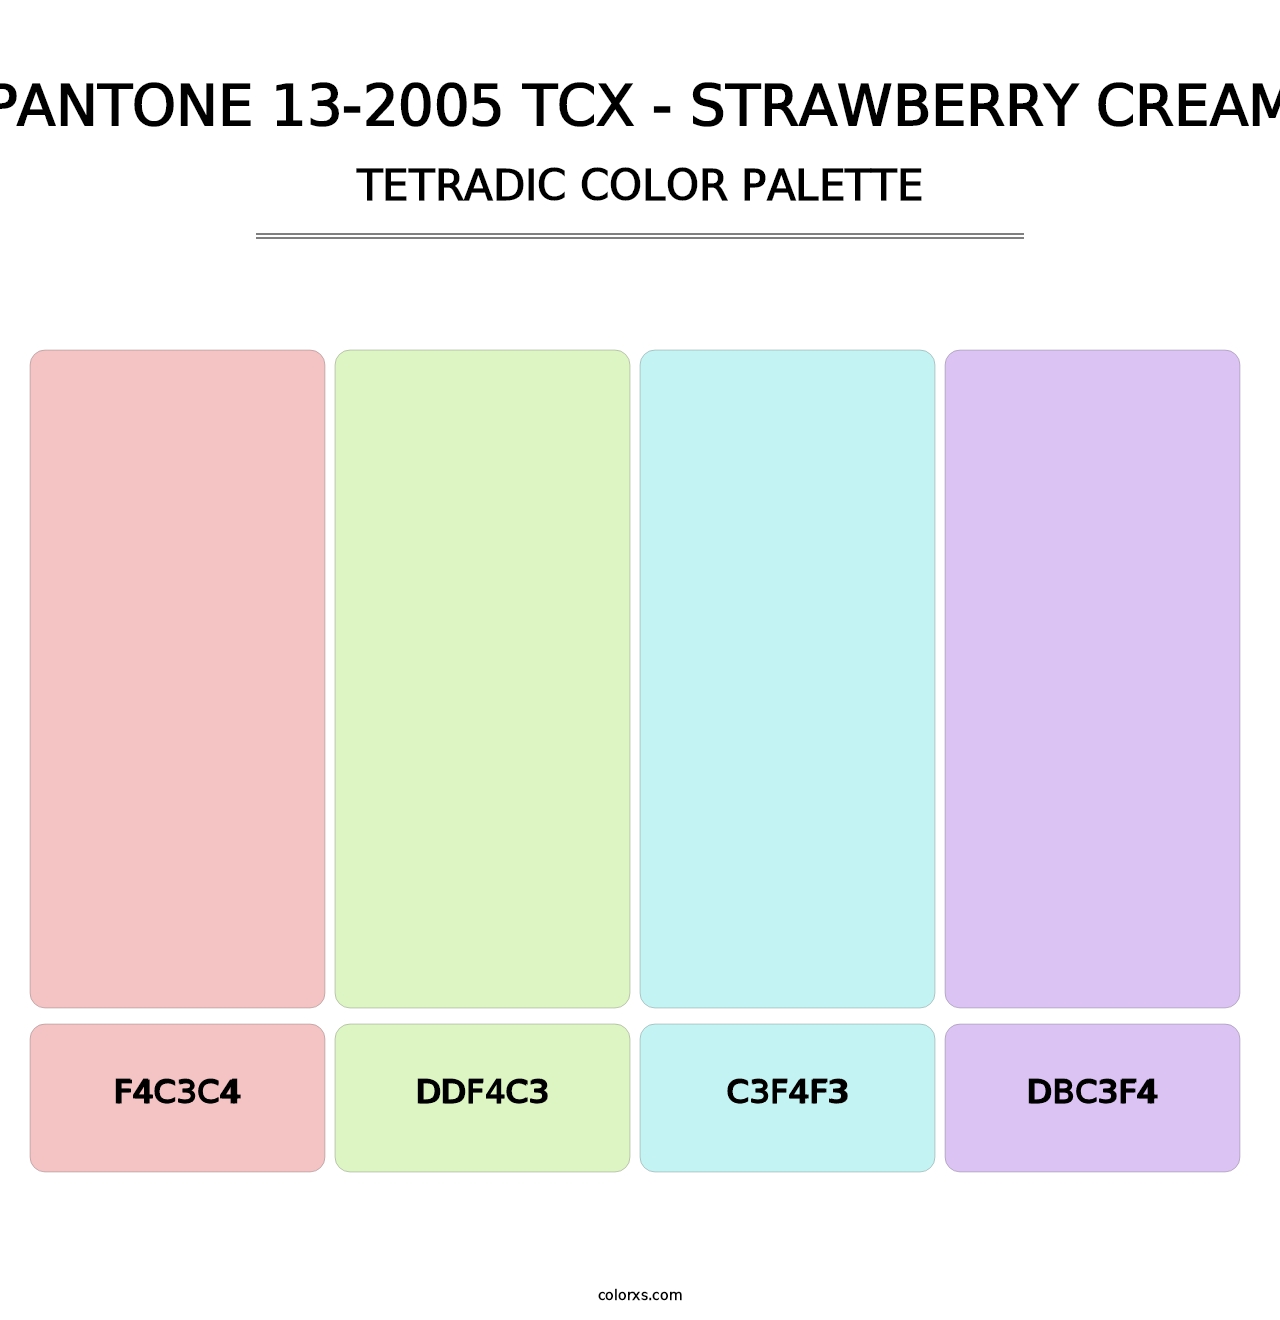 PANTONE 13-2005 TCX - Strawberry Cream - Tetradic Color Palette